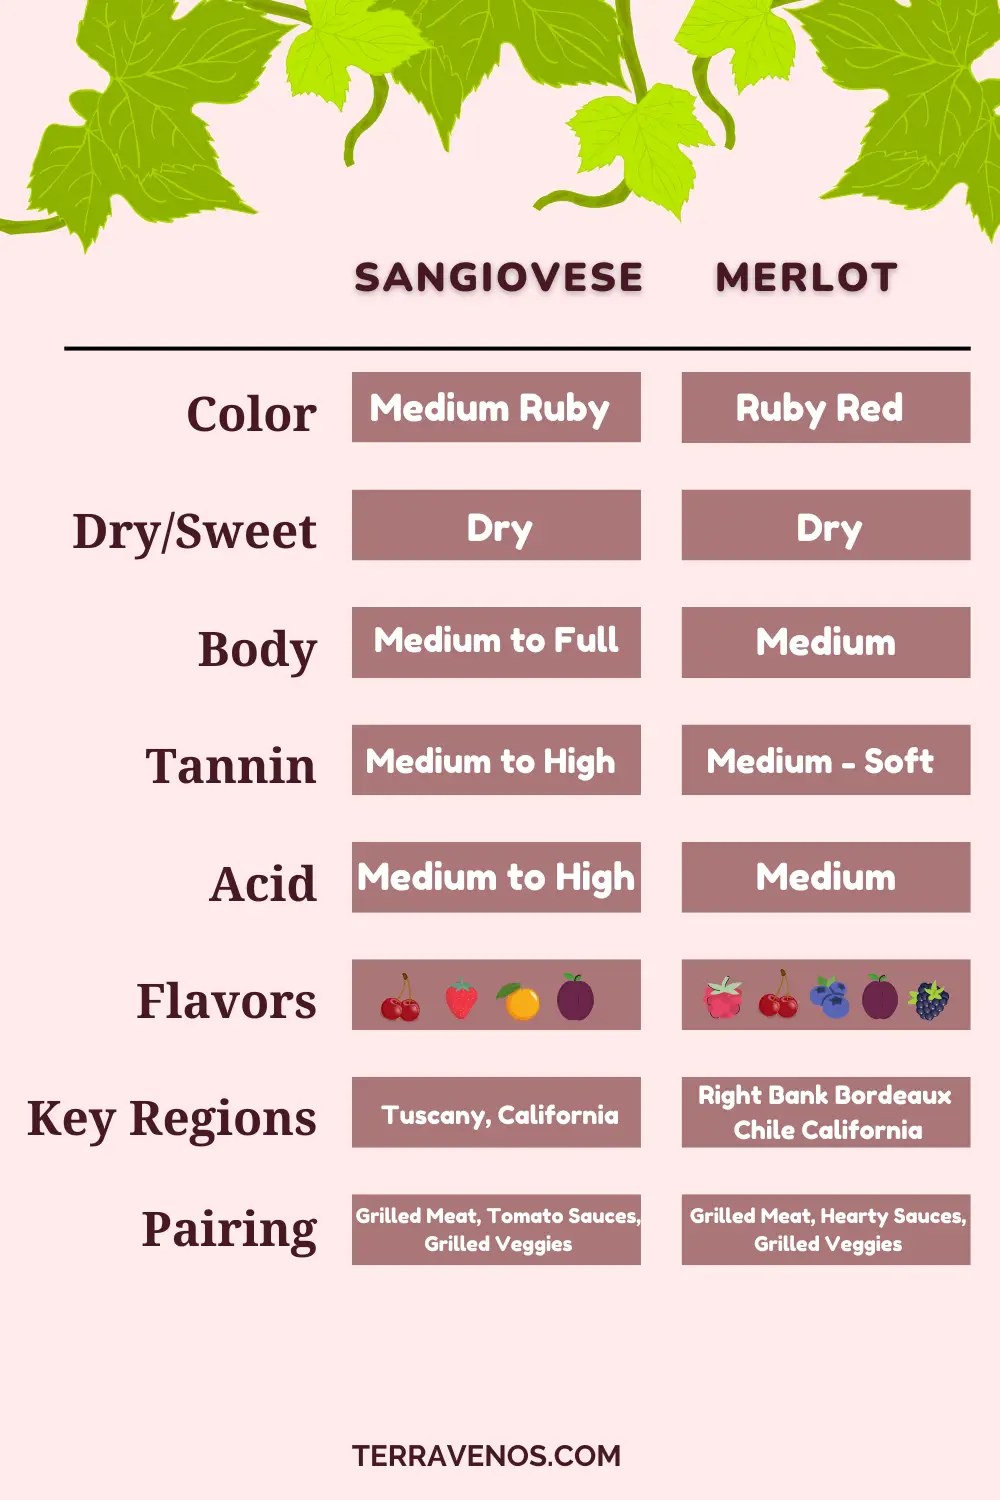 sangiovese vs merlot wine comparison infographic